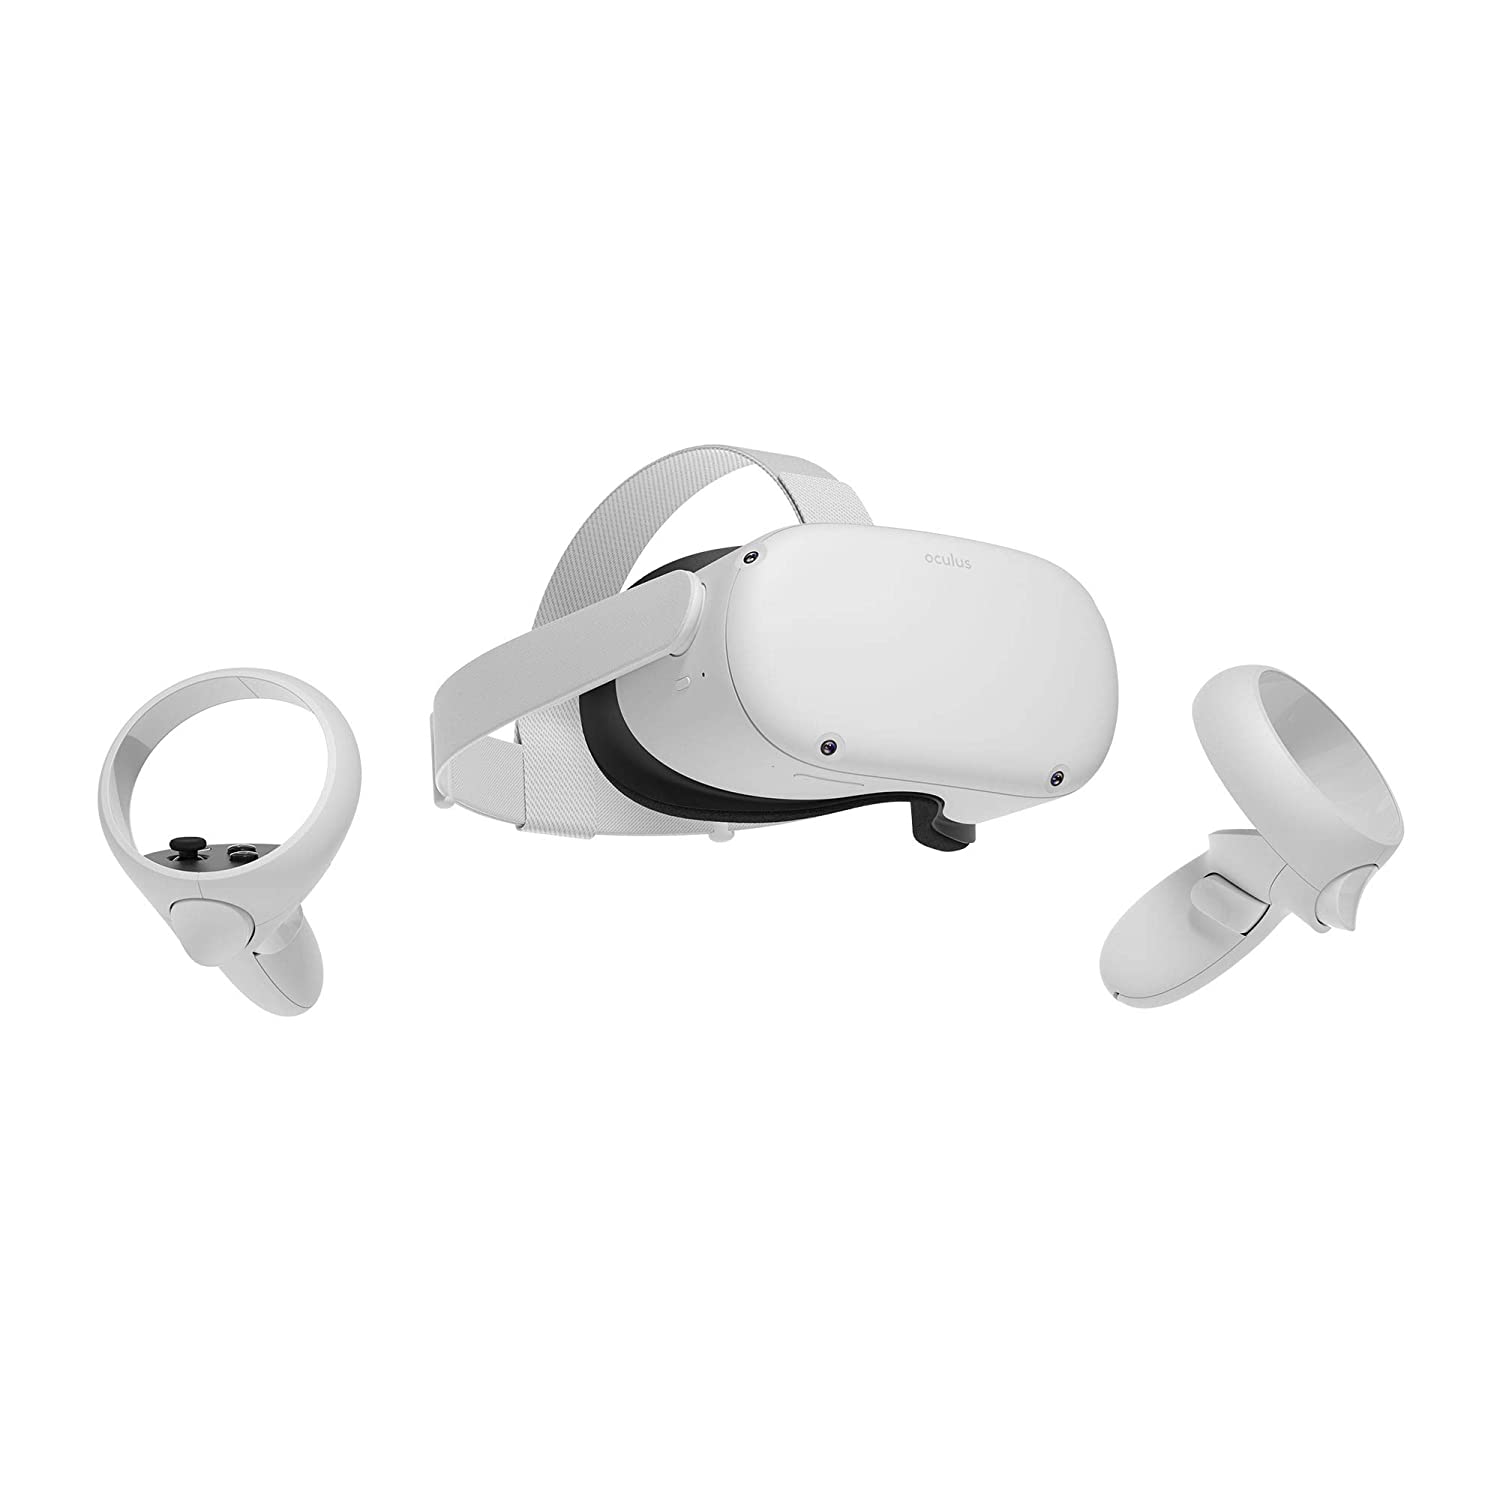 Bluetooth Headphones With Oculus Quest Online Deals Up To 56 Off Www Moeembarcelona Com